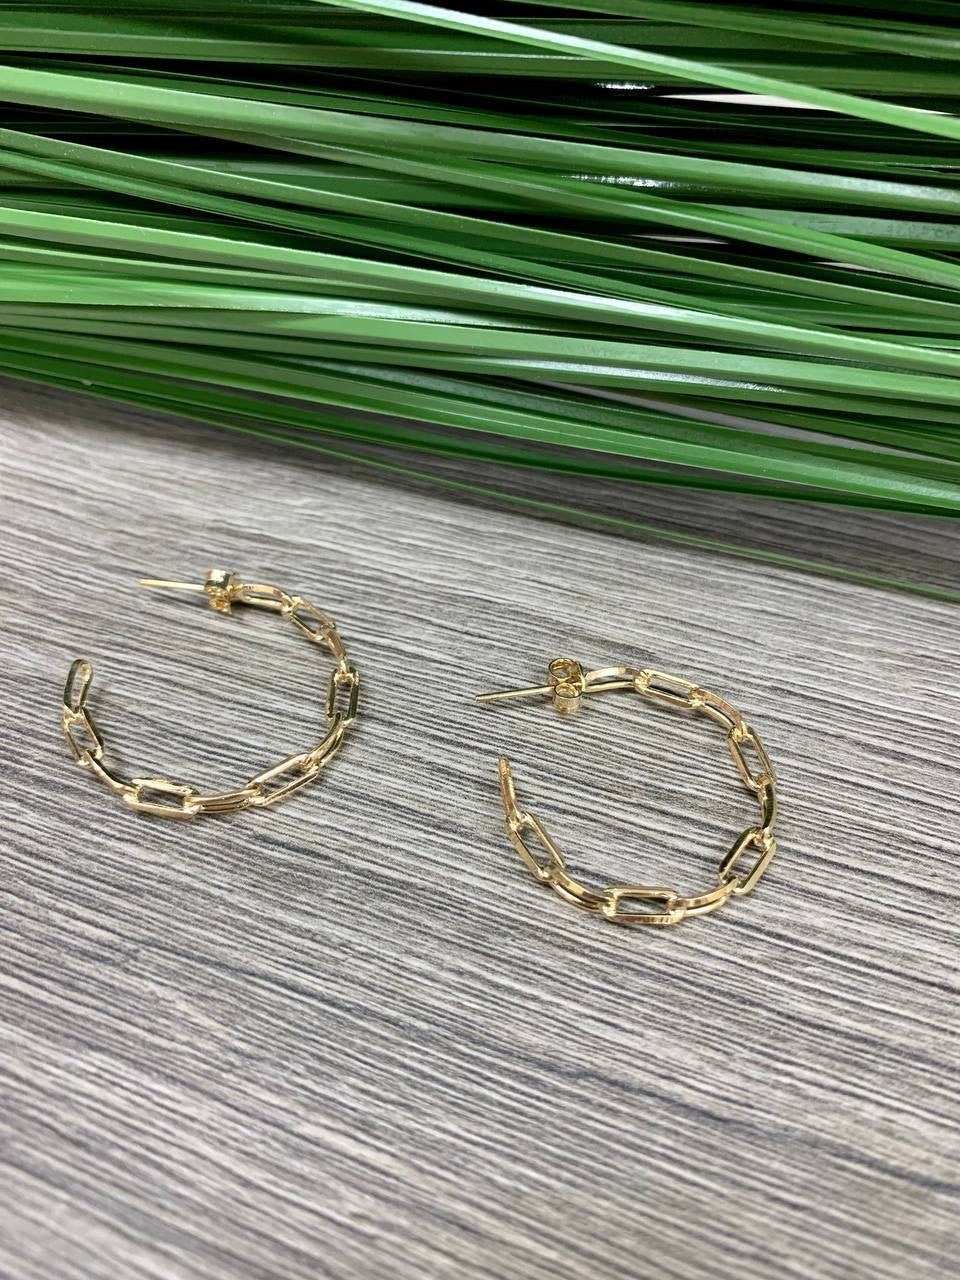 18k Gold Filled Fancy 28mm Paperclip Hoop Earrings, C-Hoop, Push Back Closure, Wholesale Jewelry Supplies